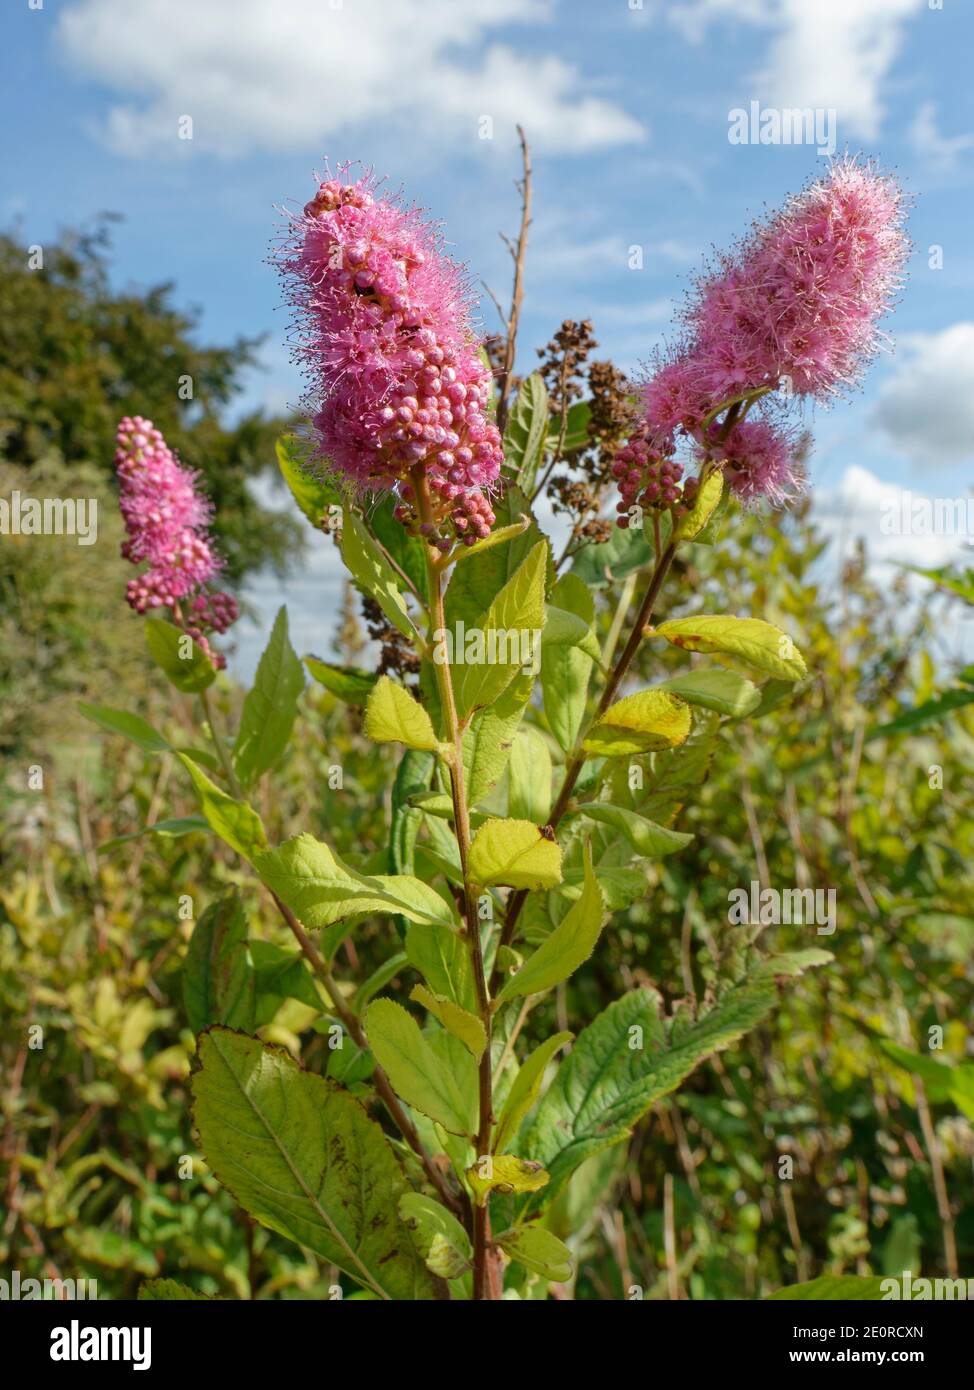 Rose spirea / Douglas’ spiraea (Spiraea douglasii), a North American species naturalised in the UK, flowering in a Wiltshire hedgerow, UK, September. Stock Photo